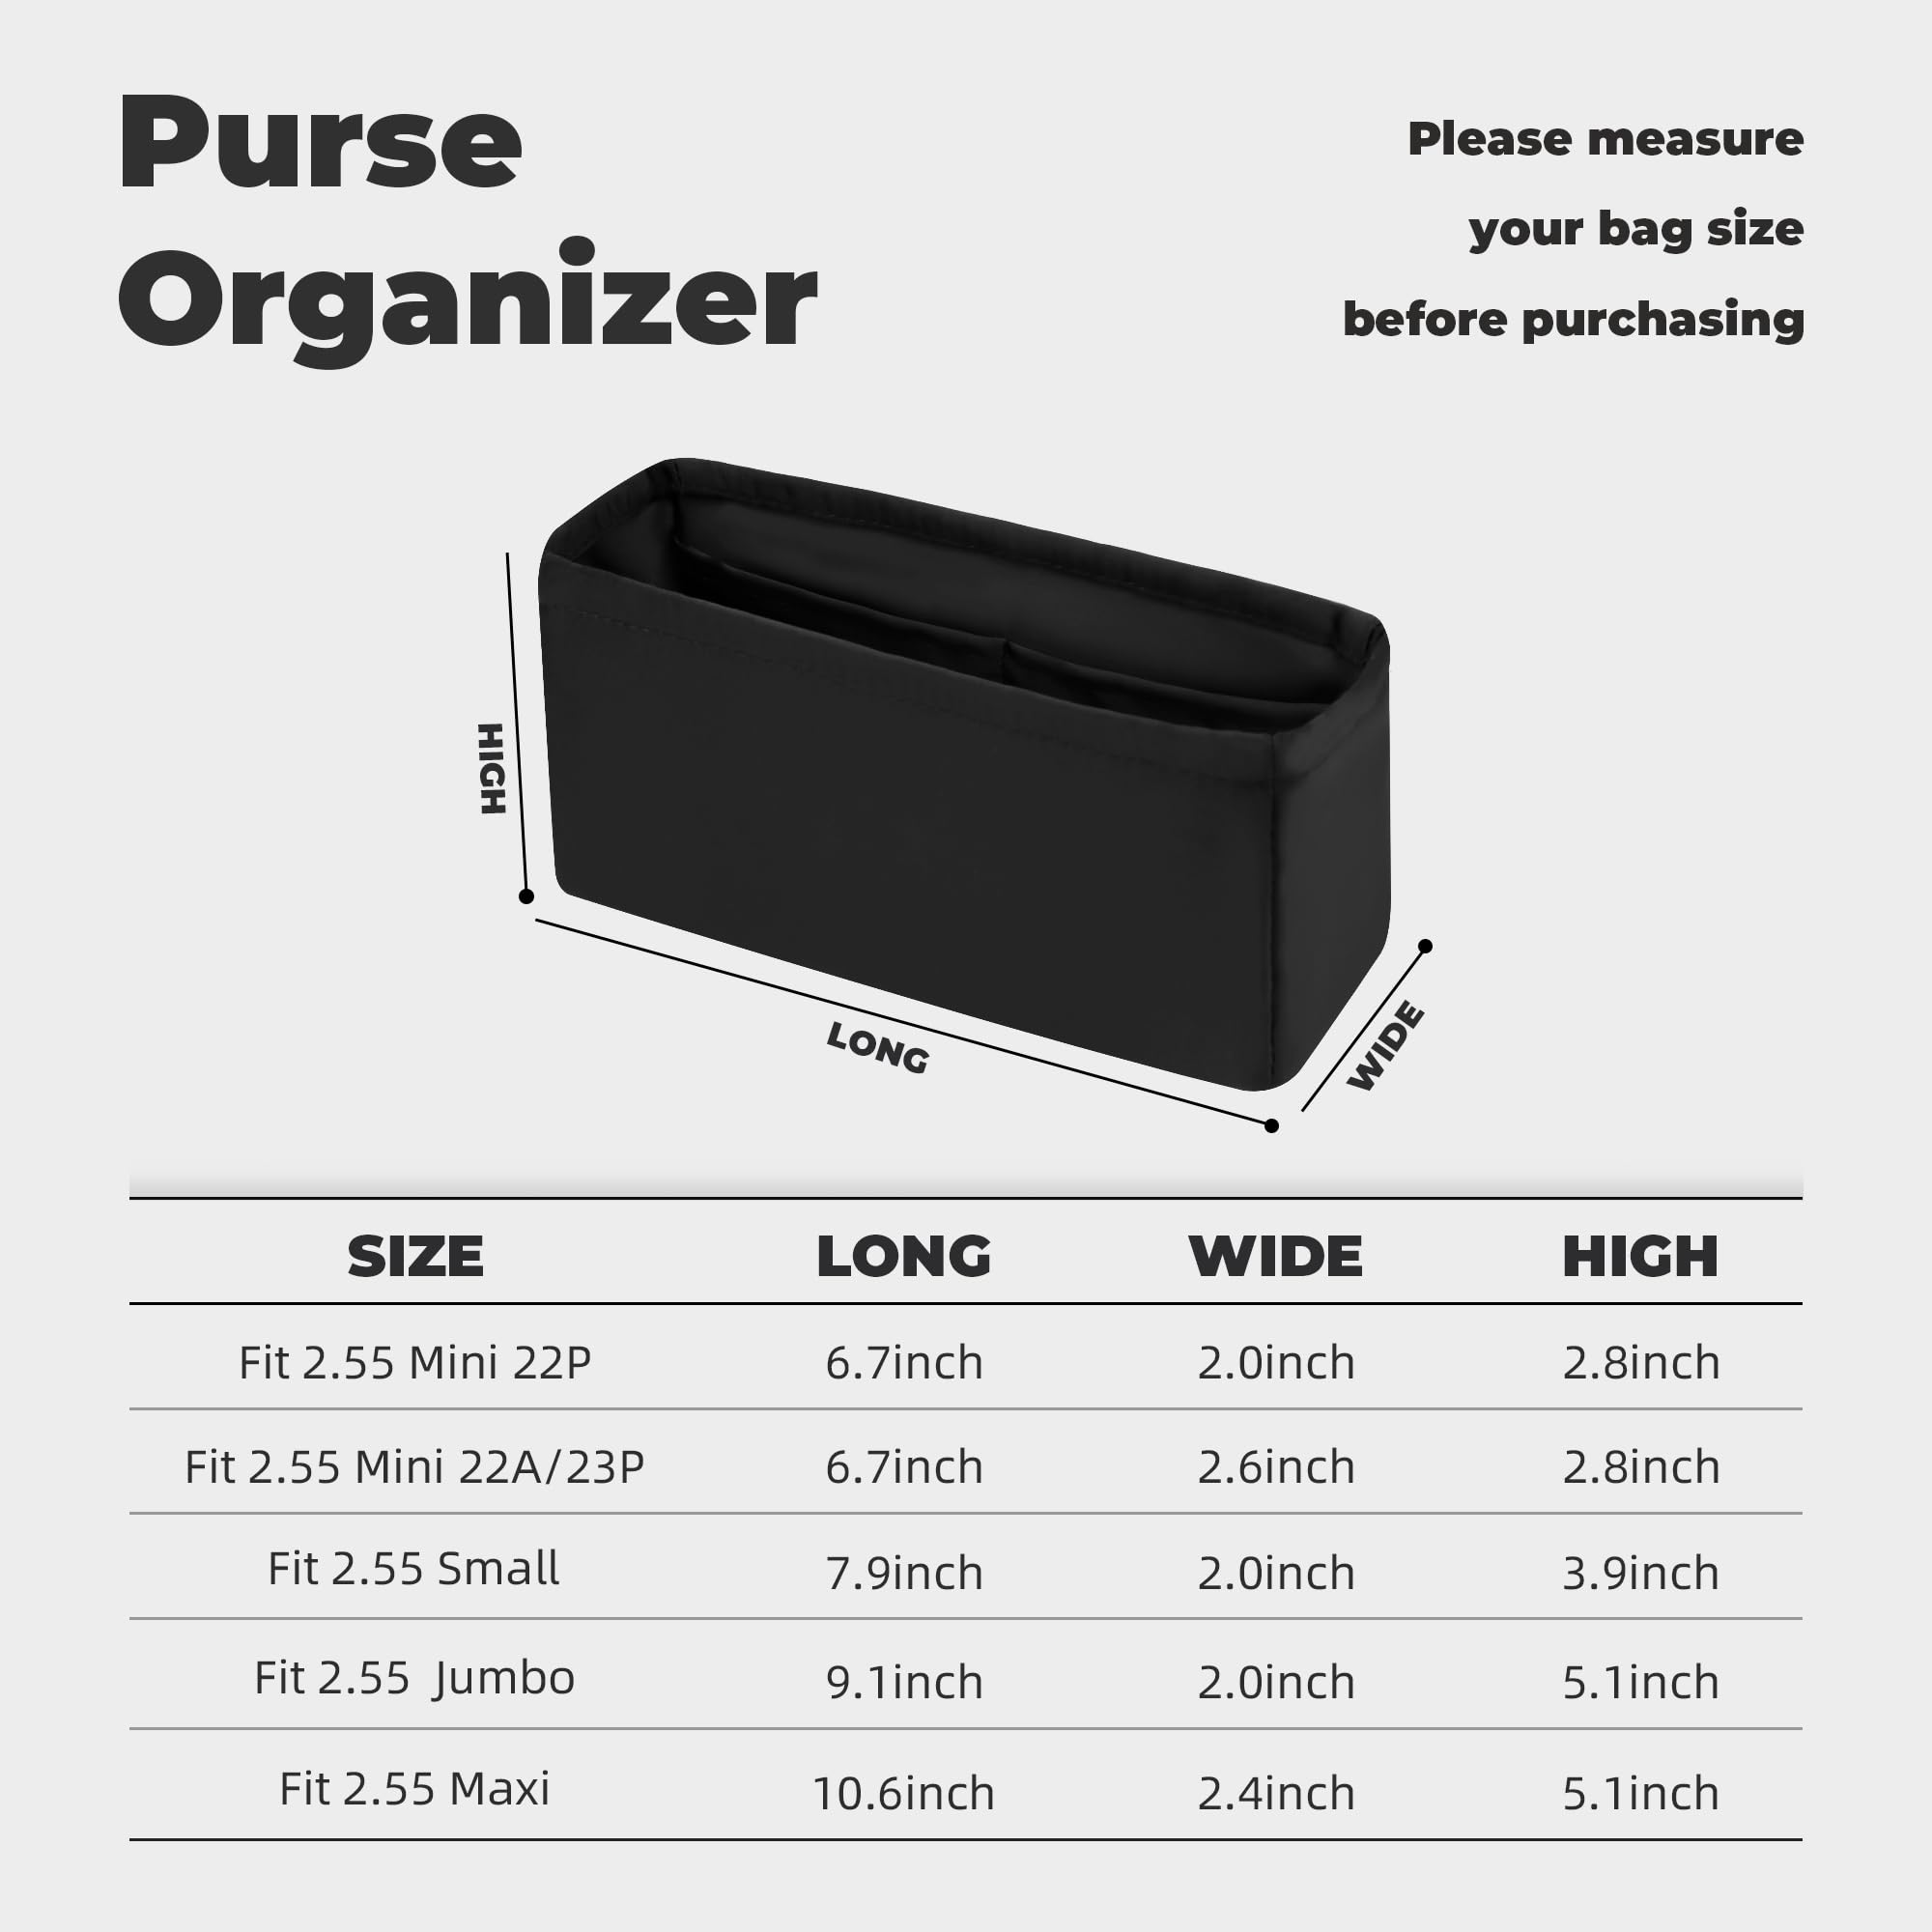 XYJG Purse Handbag Silky Organizer Insert Keep Bag Shape Fits LV Chanel 2.55 22P/22A/23p/Small/Jumbo/Jumbo/Maxi Bags, Luxury Handbag Tote Lightweight Sturdy(2.55 Mini 22P,Black)